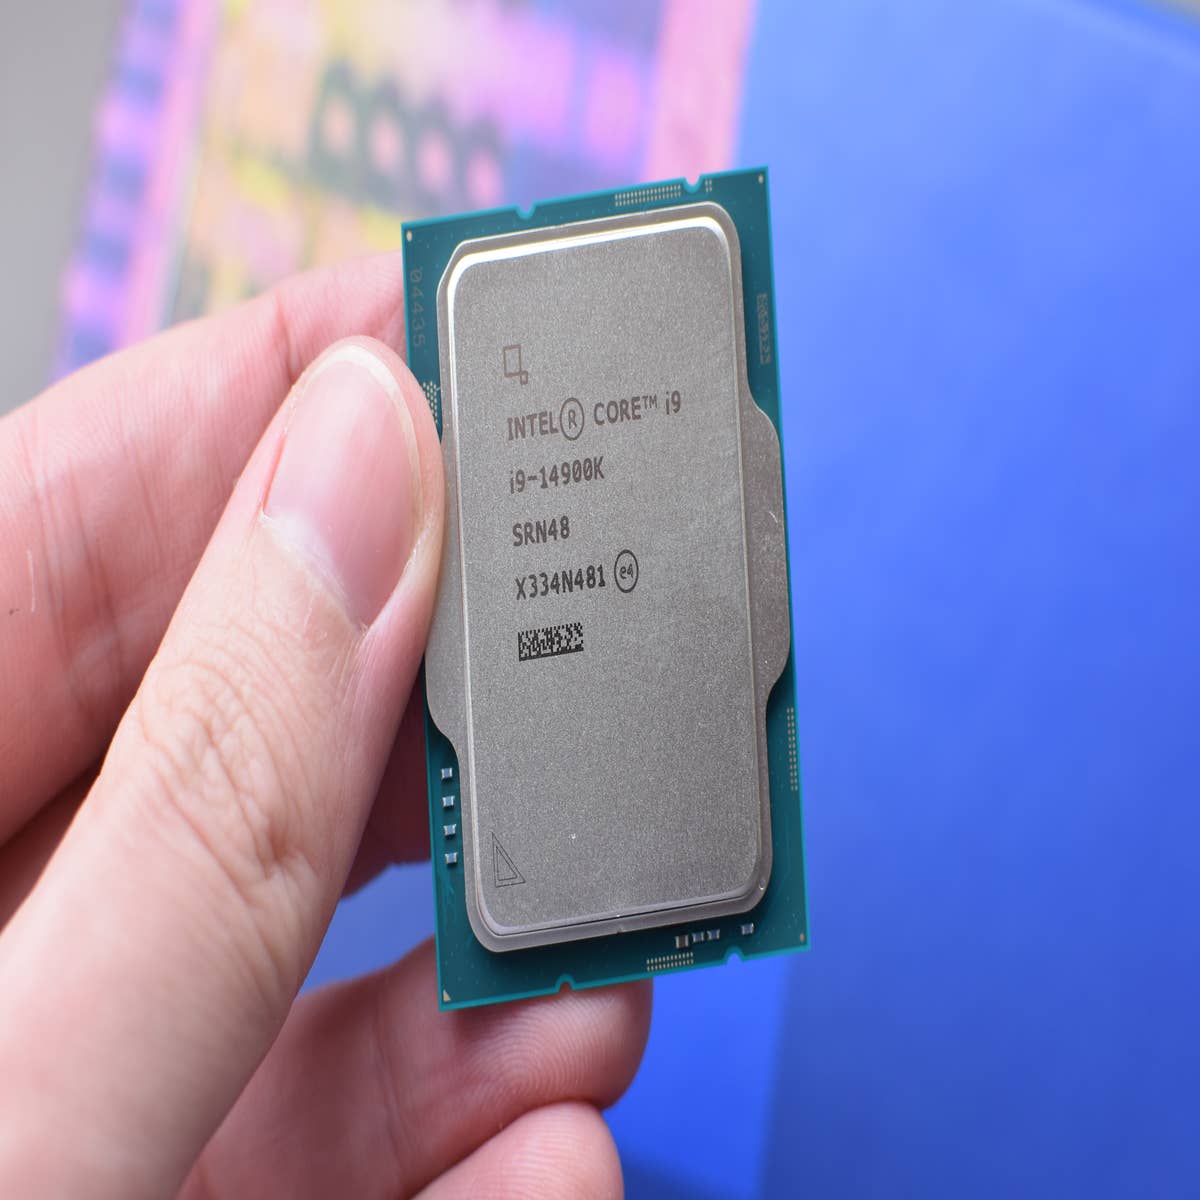 Intel® Core™ i9-14900K New Gaming Desktop Processor 24 cores (8 P-cores +  16 E-cores) with Integrated Graphics - Unlocked